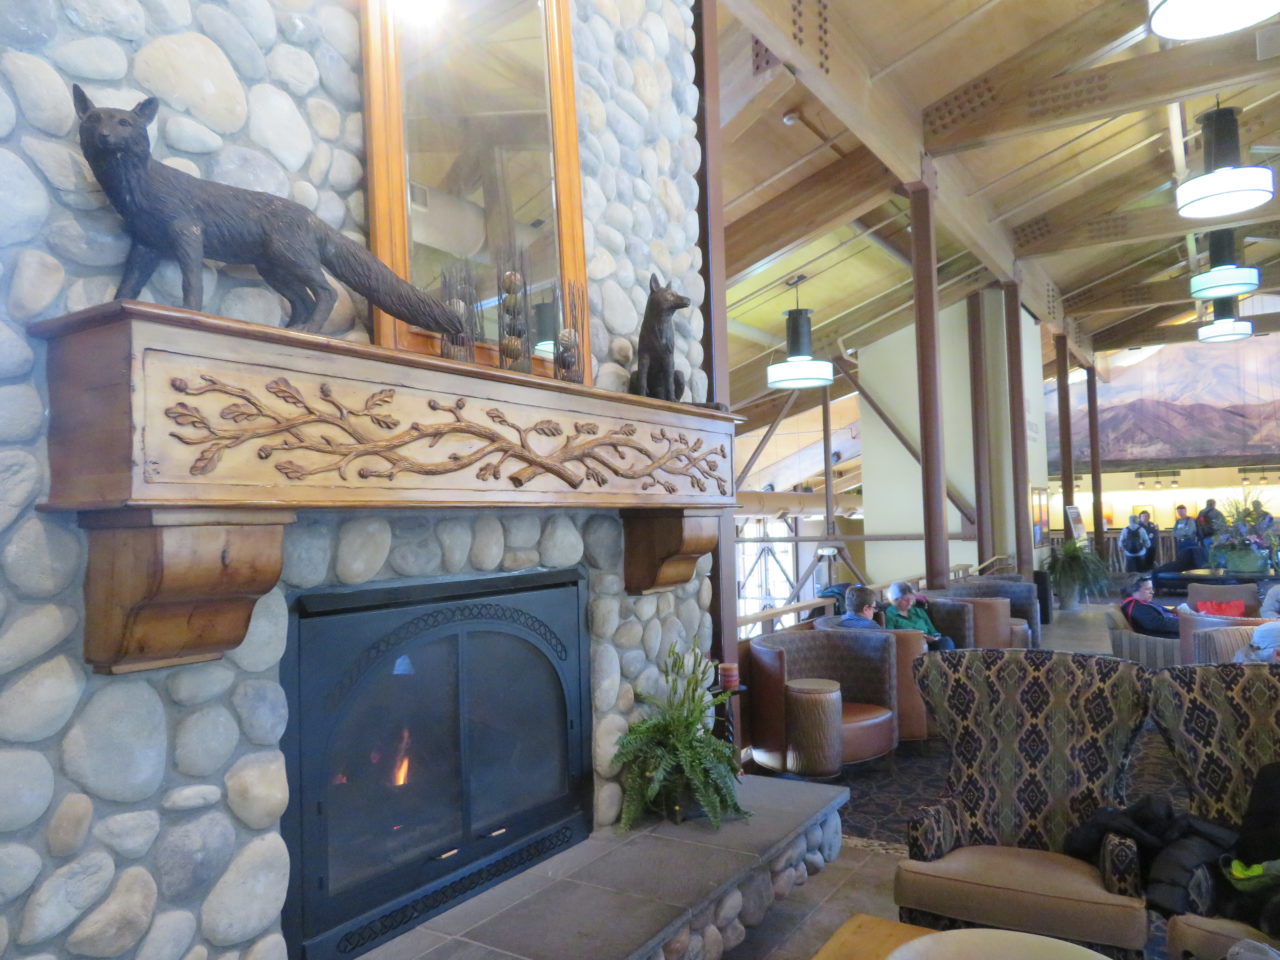 Lobby of the Denali Princess Wilderness Lodge in Alaska